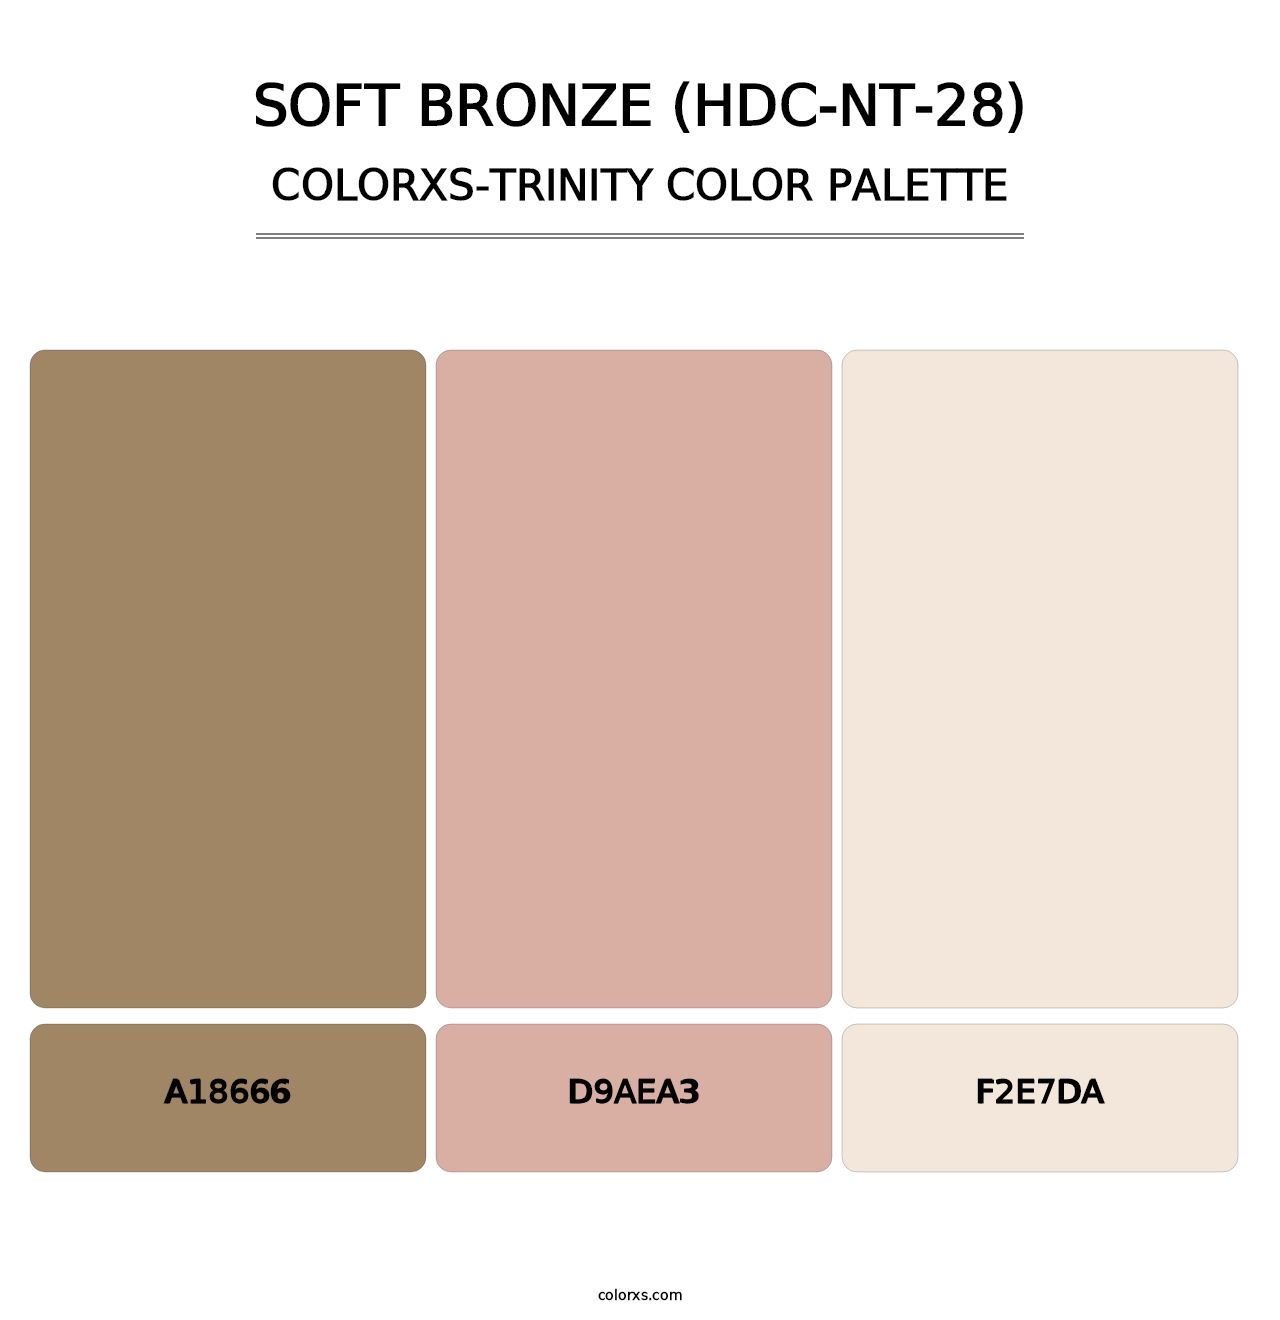 Soft Bronze (HDC-NT-28) - Colorxs Trinity Palette